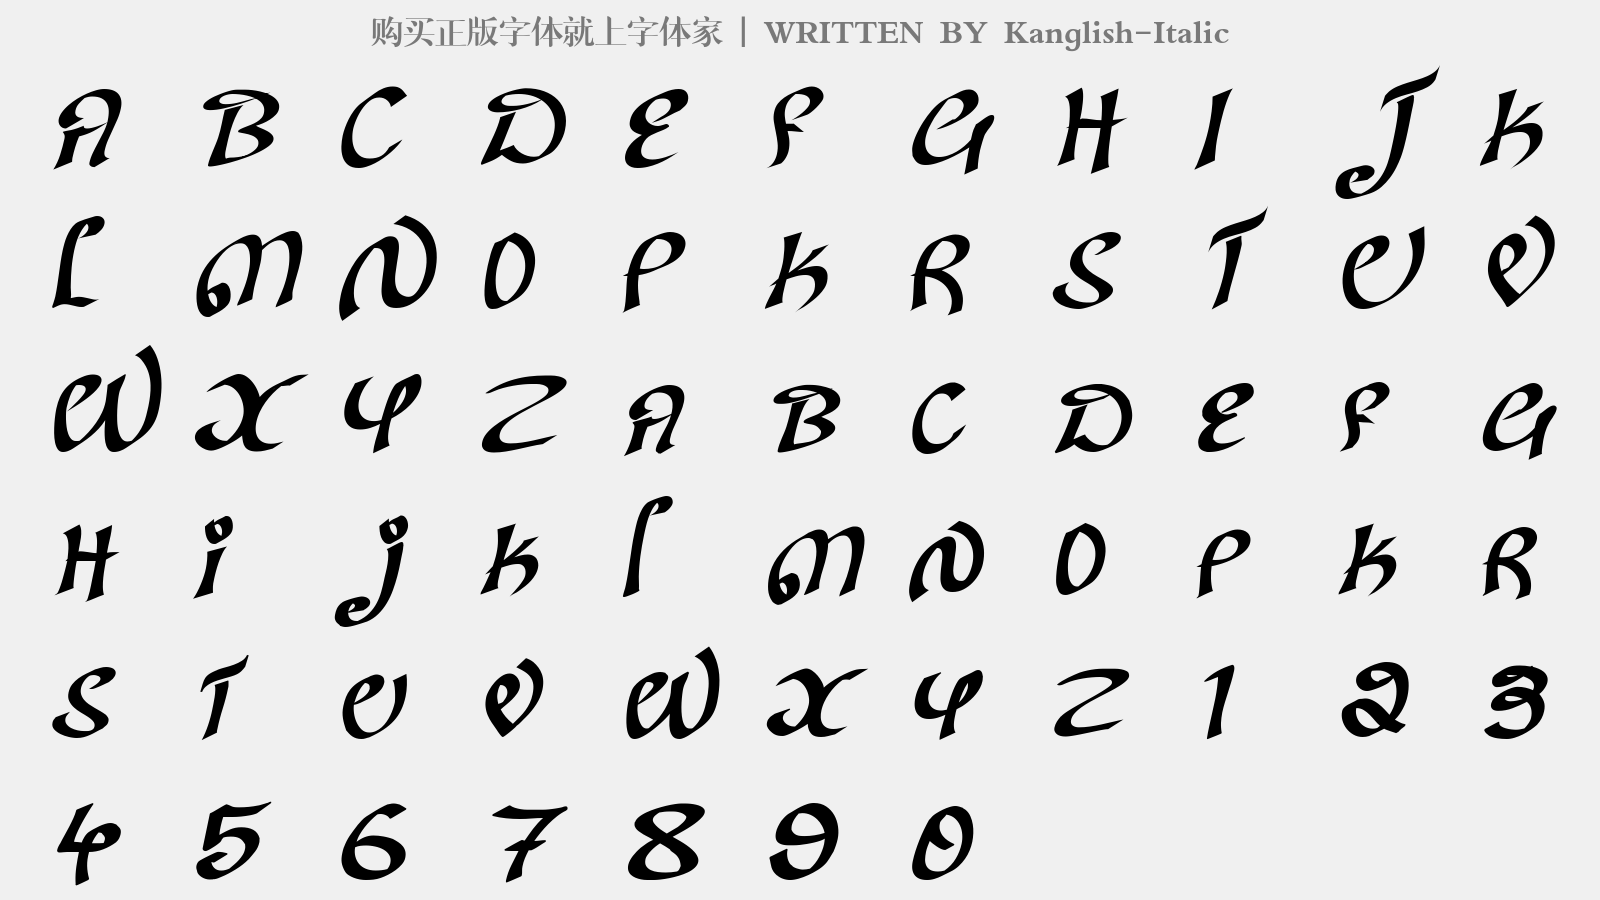 Kanglish-Italic - 大写字母/小写字母/数字